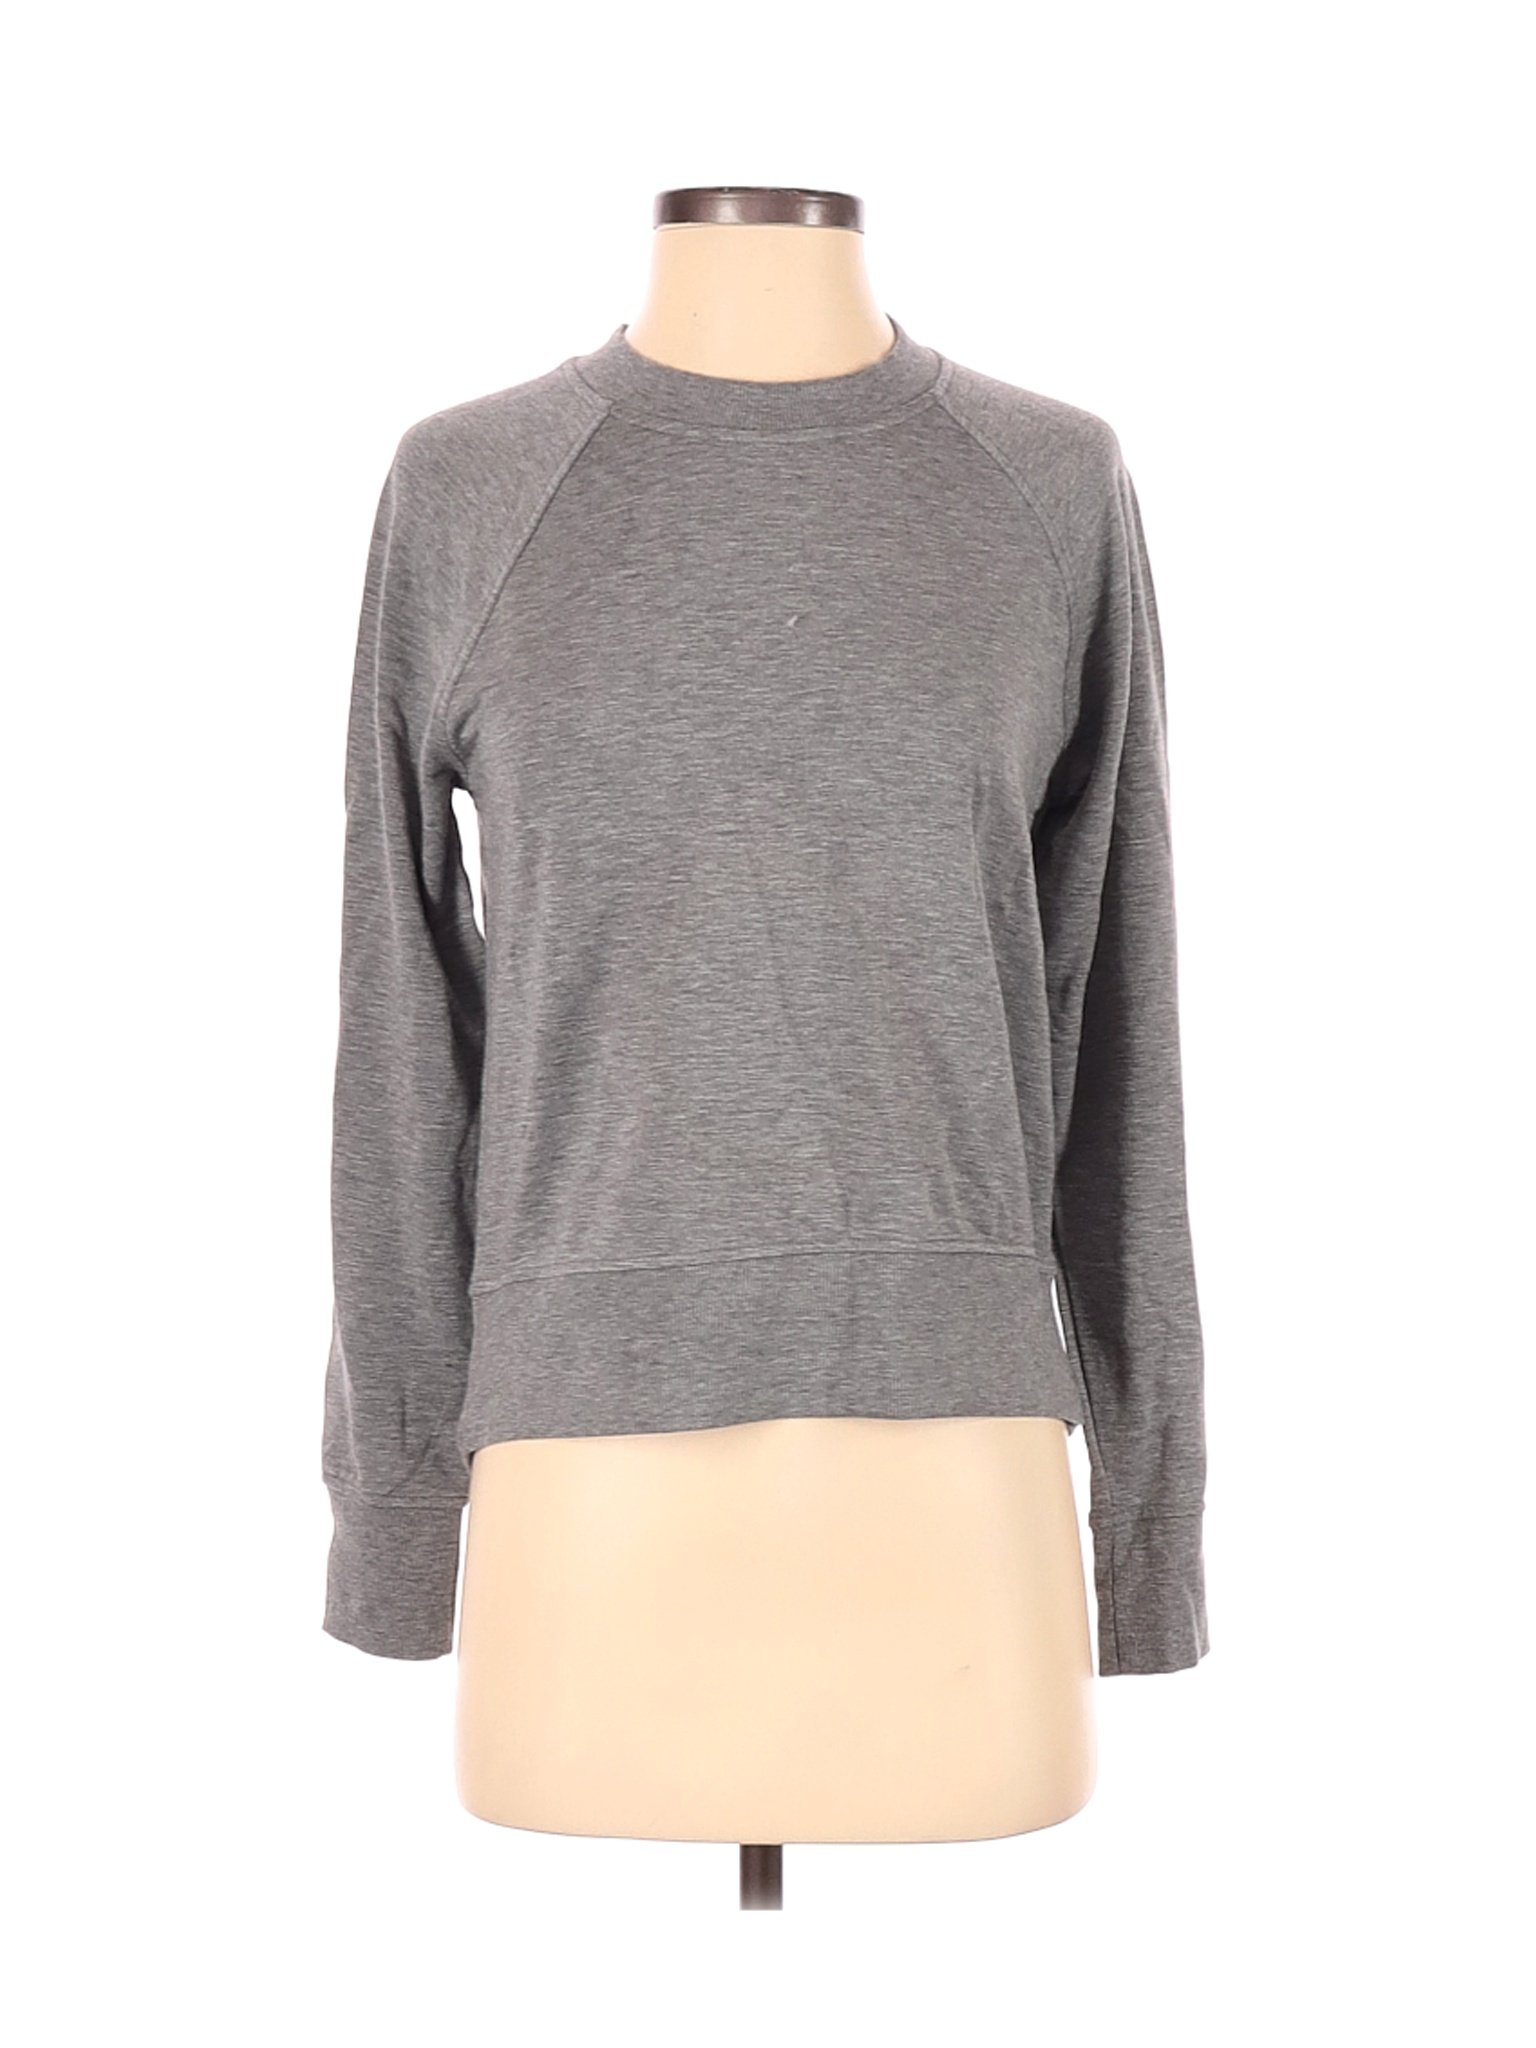 NWT A New Day Women Gray Sweatshirt XS | eBay